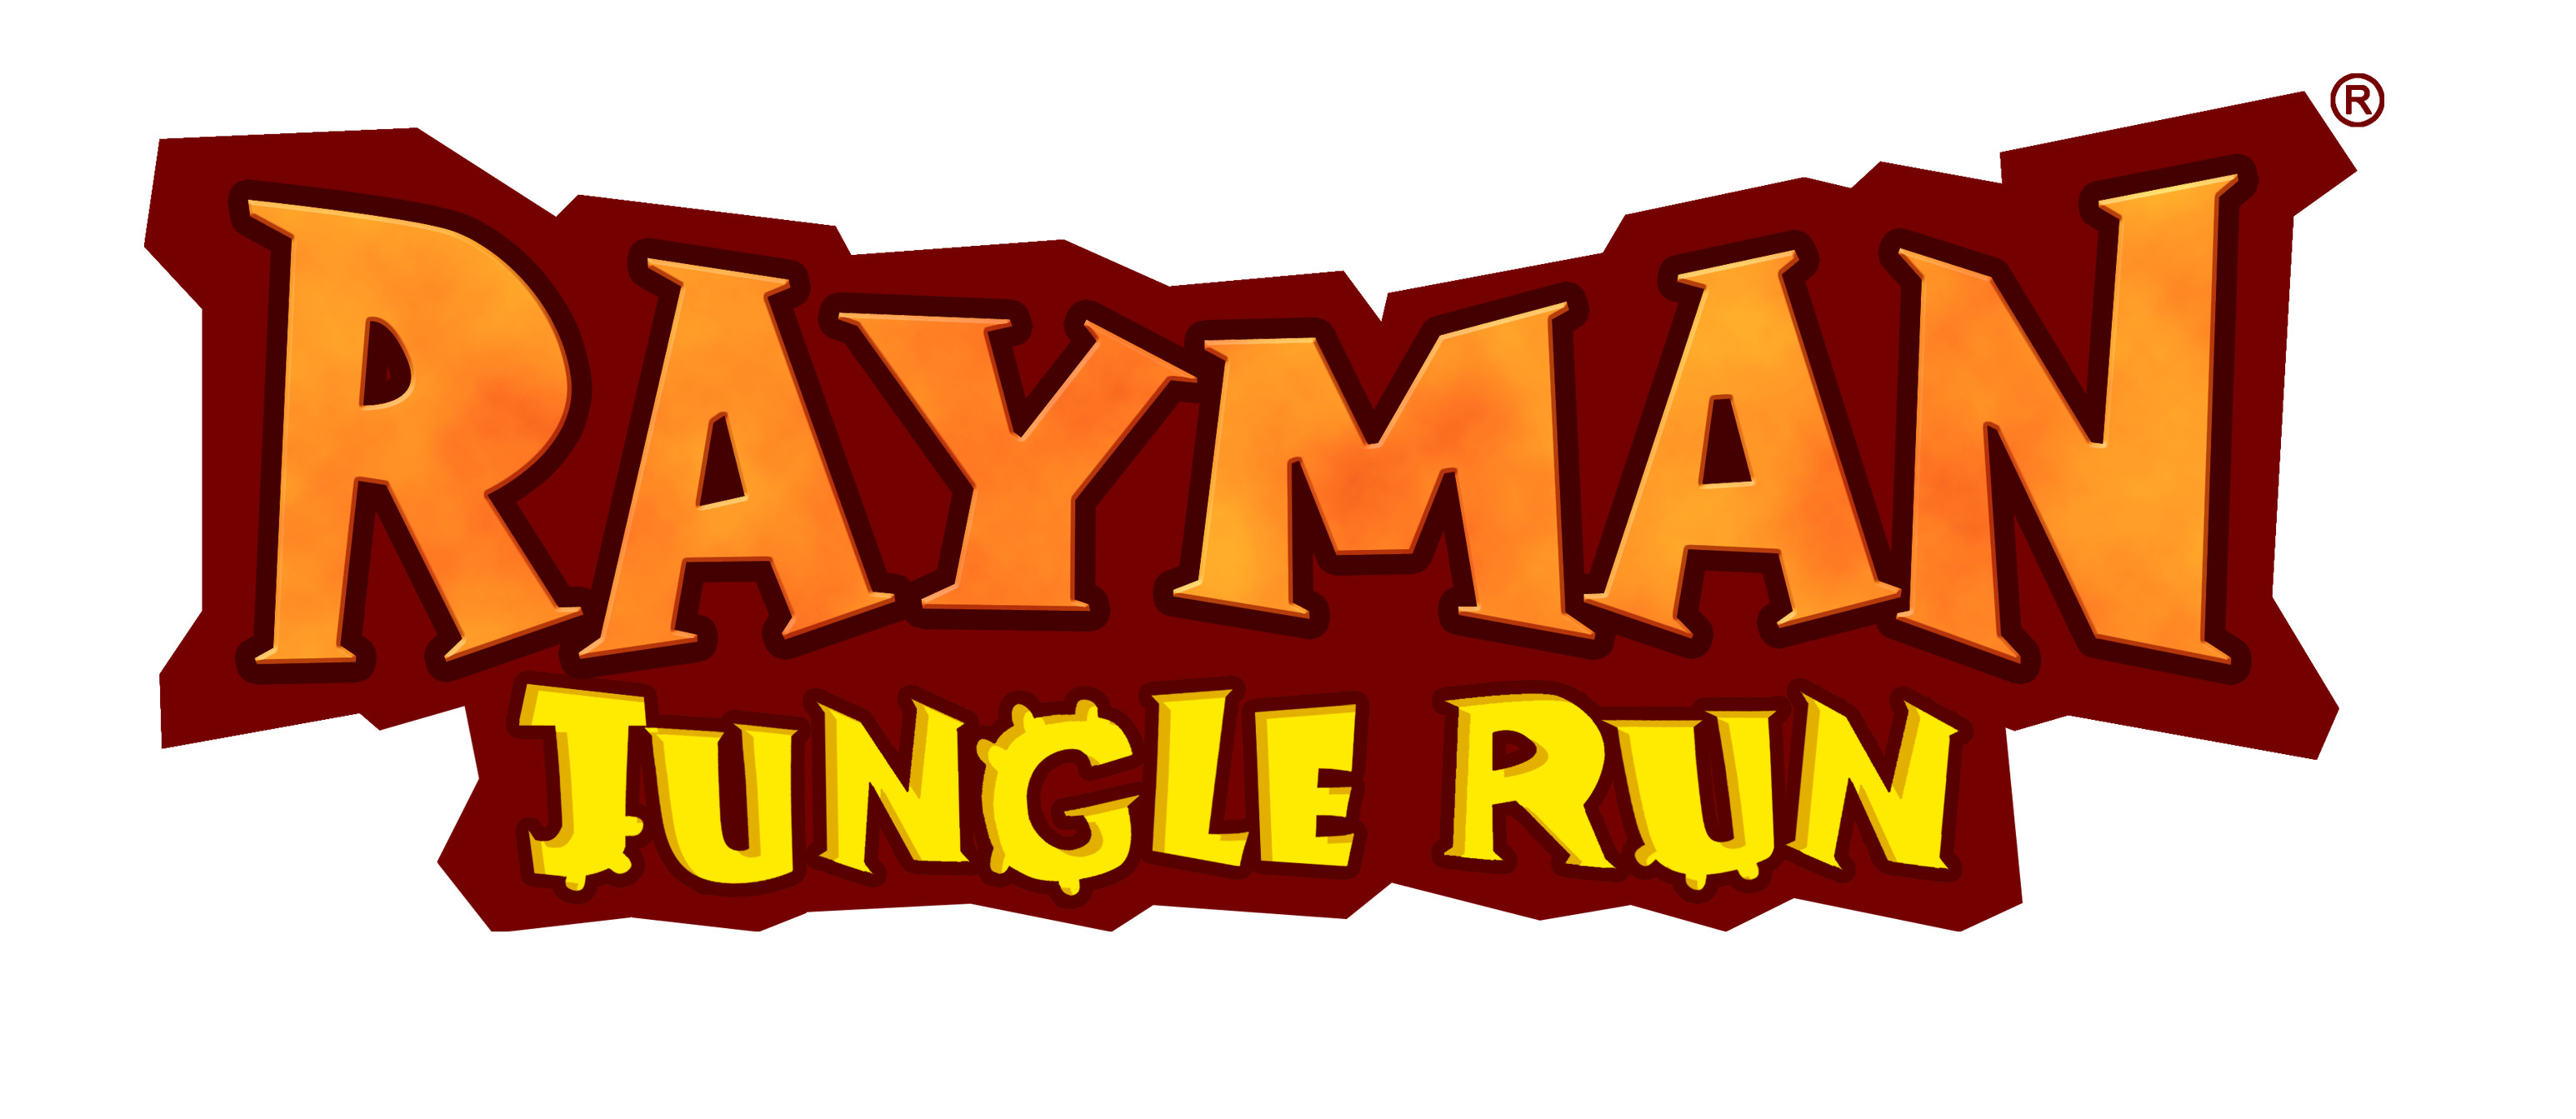 Rayman jungle run free